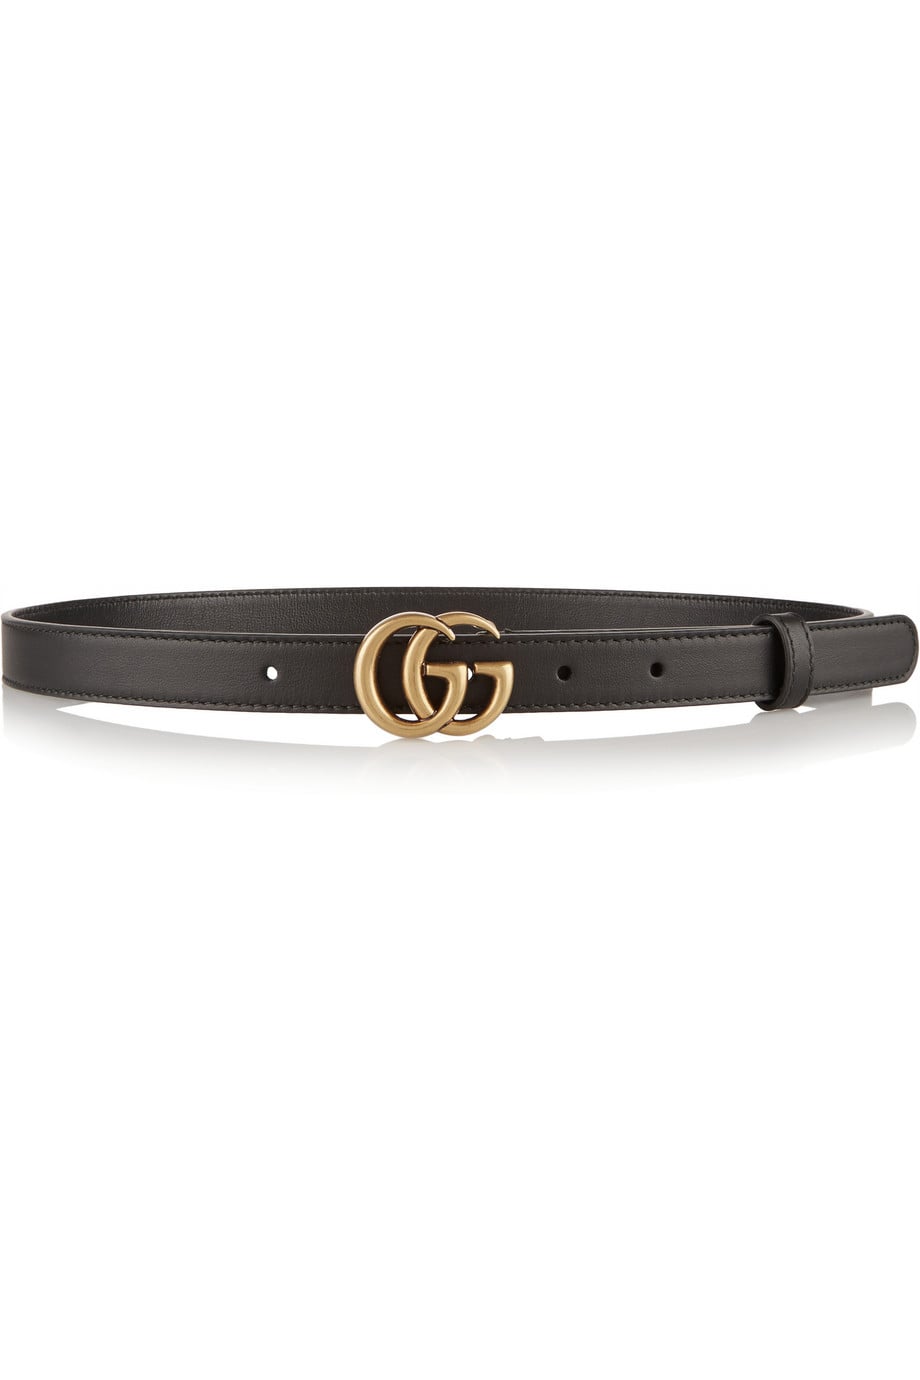 Gucci belt.jpg